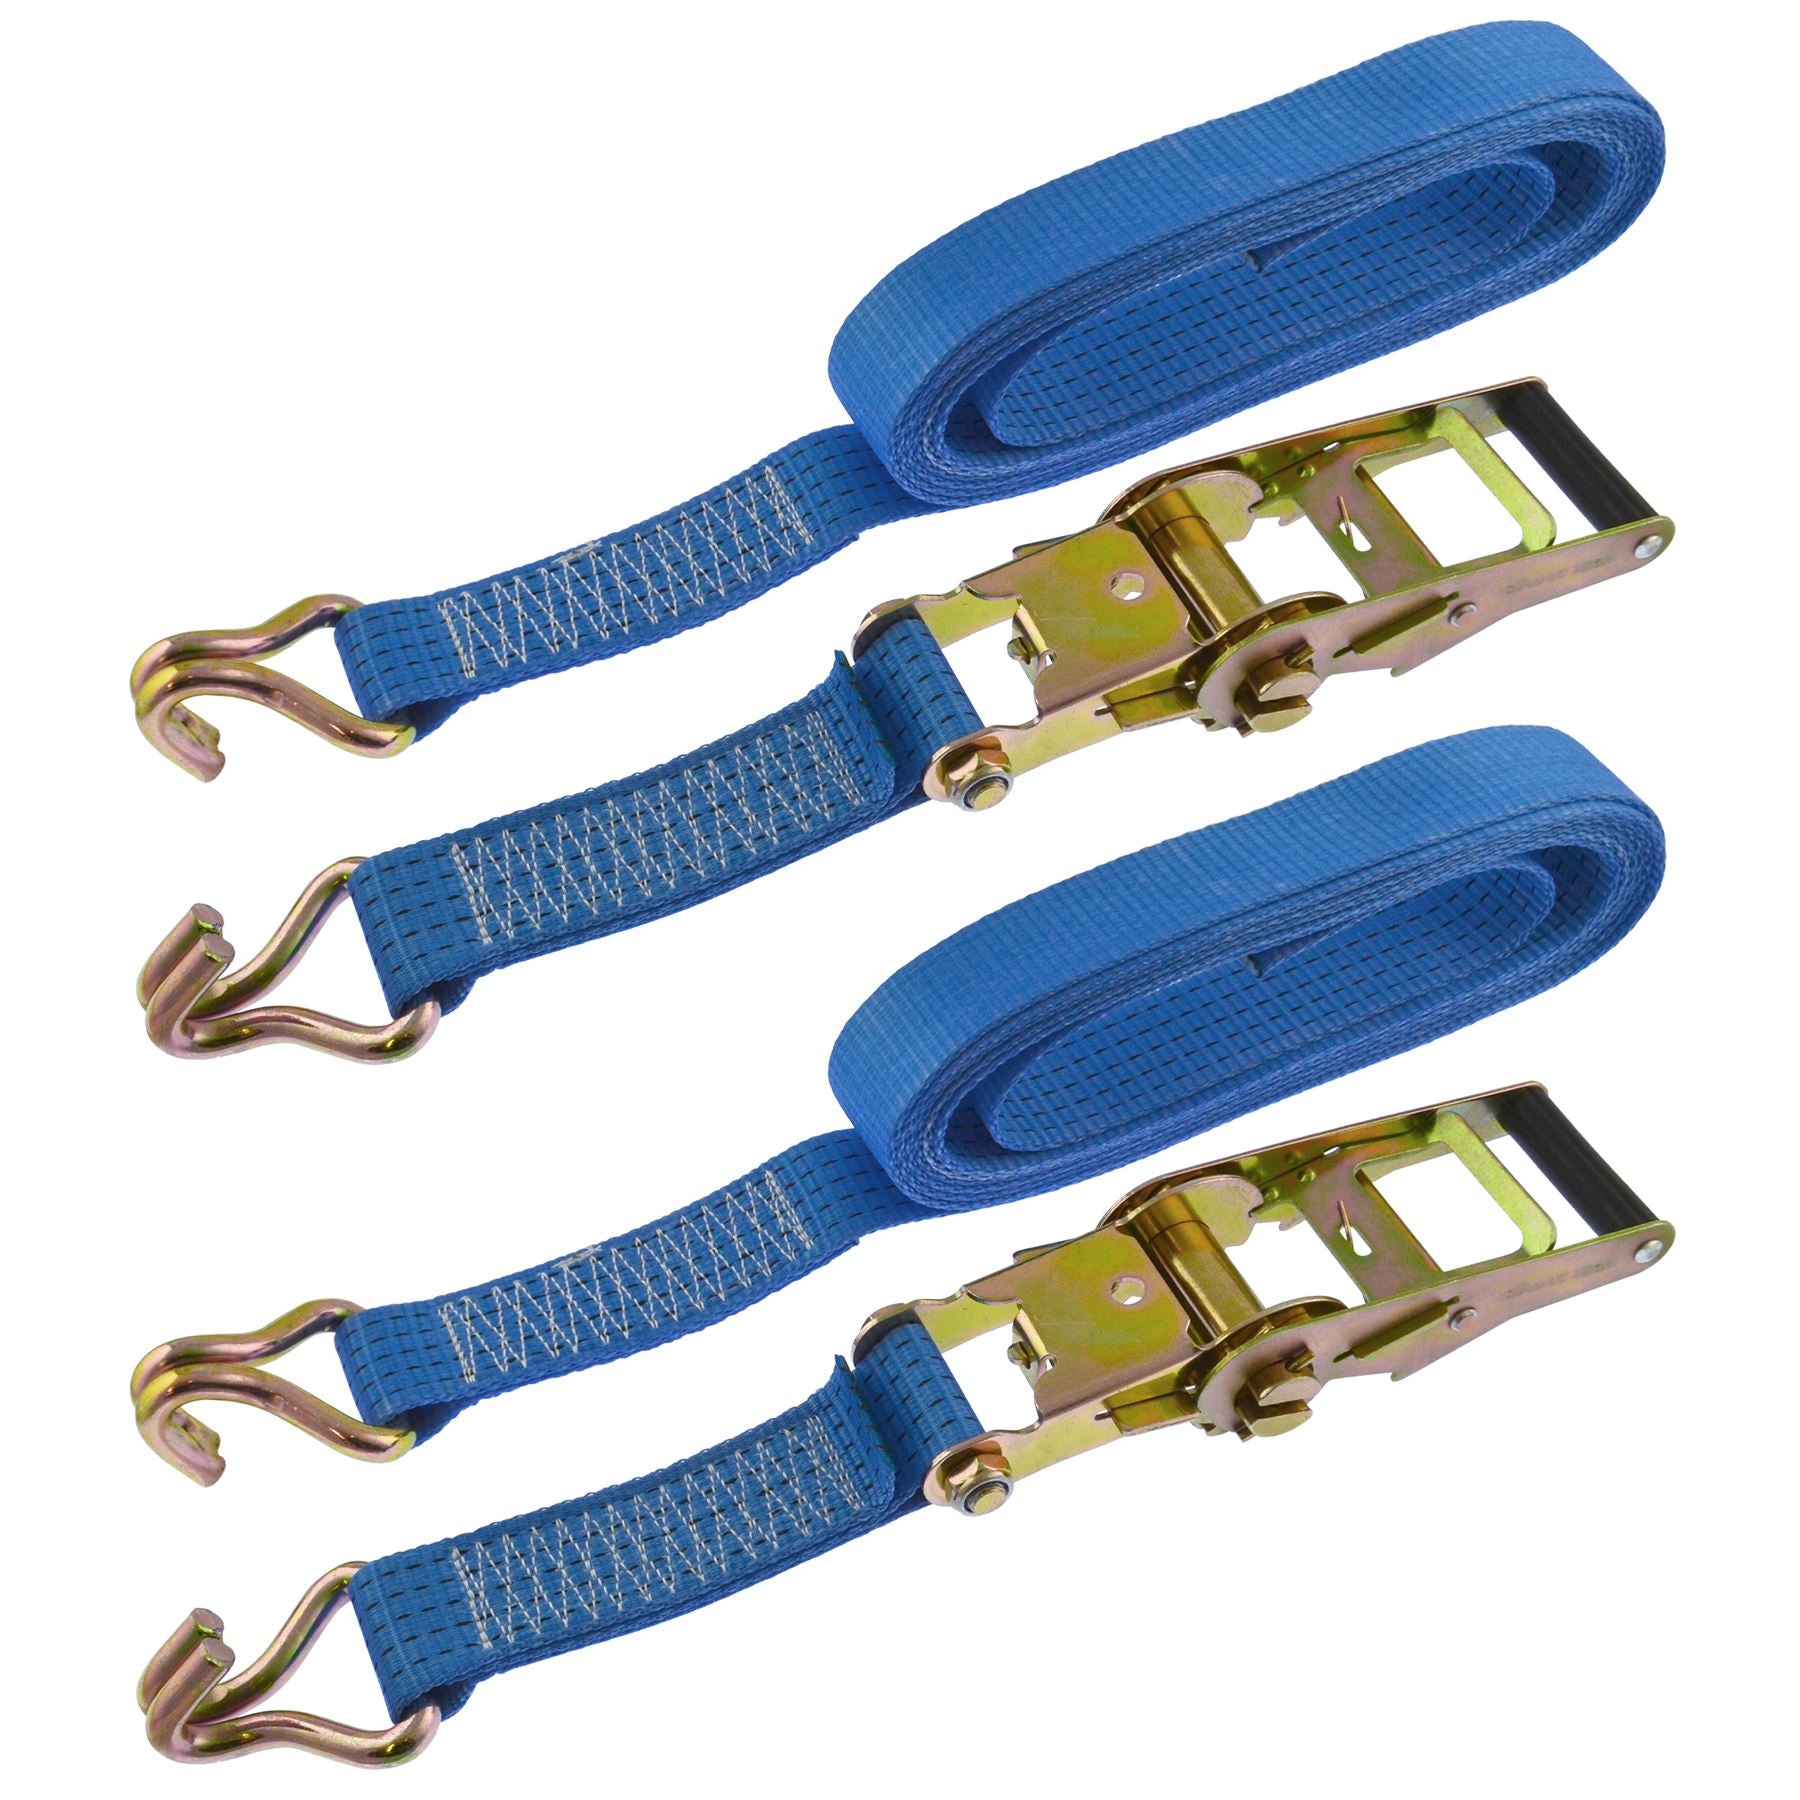 Ratchet Strap Trailer Tie Down 5m Handle Hooks Recovery 2.5 Ton Lashing x 2